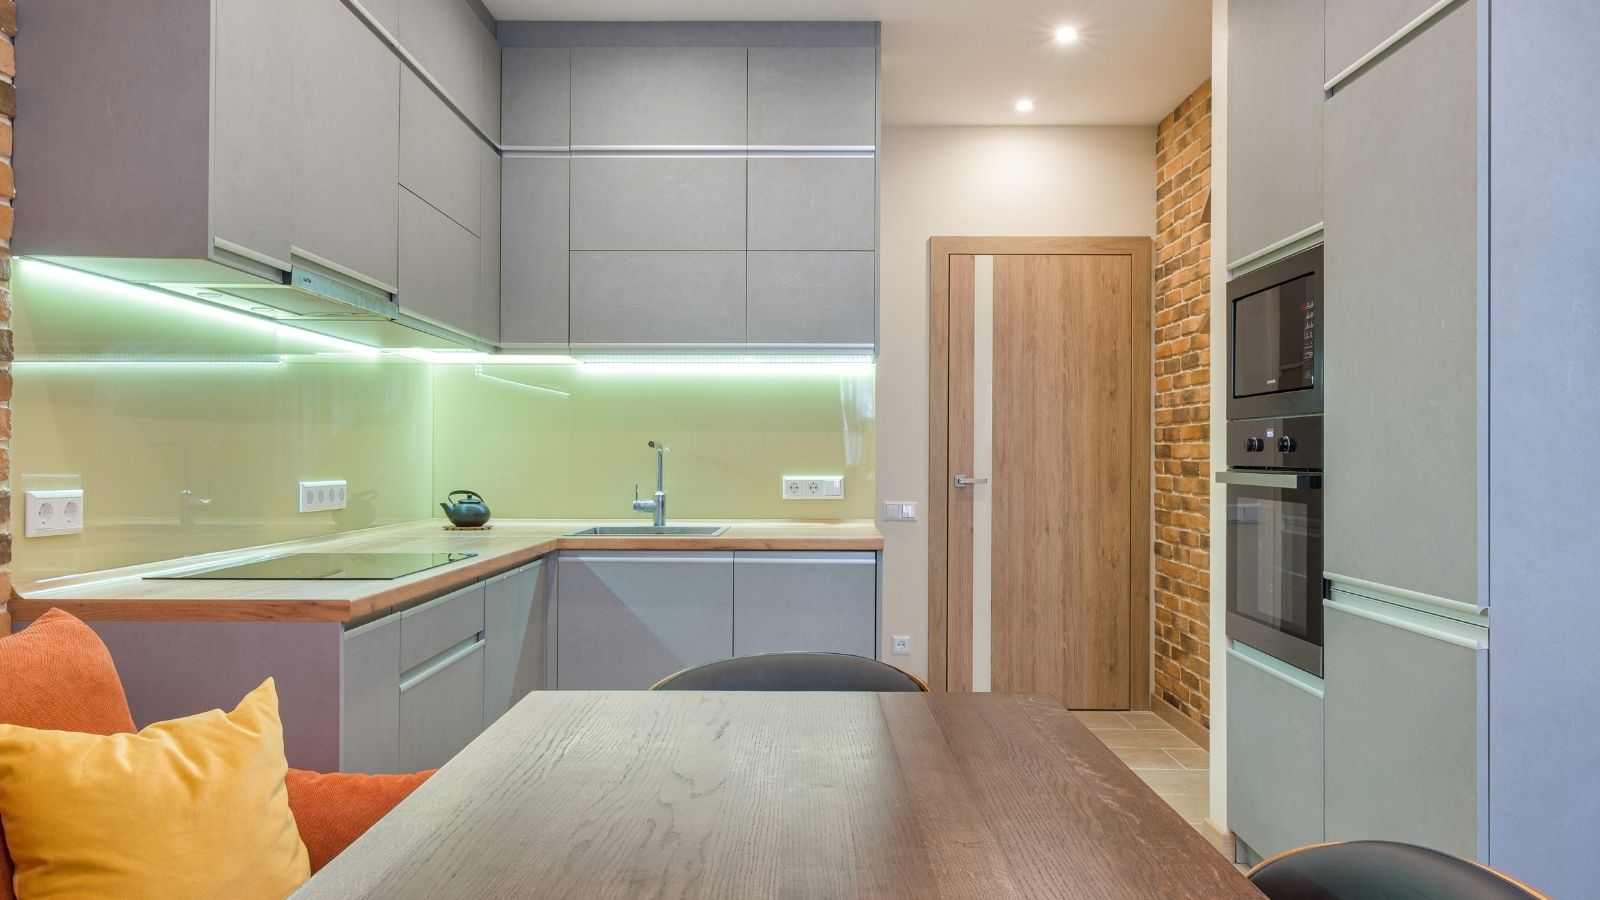 Do you want a warm, inviting, sleek, modern kitchen?